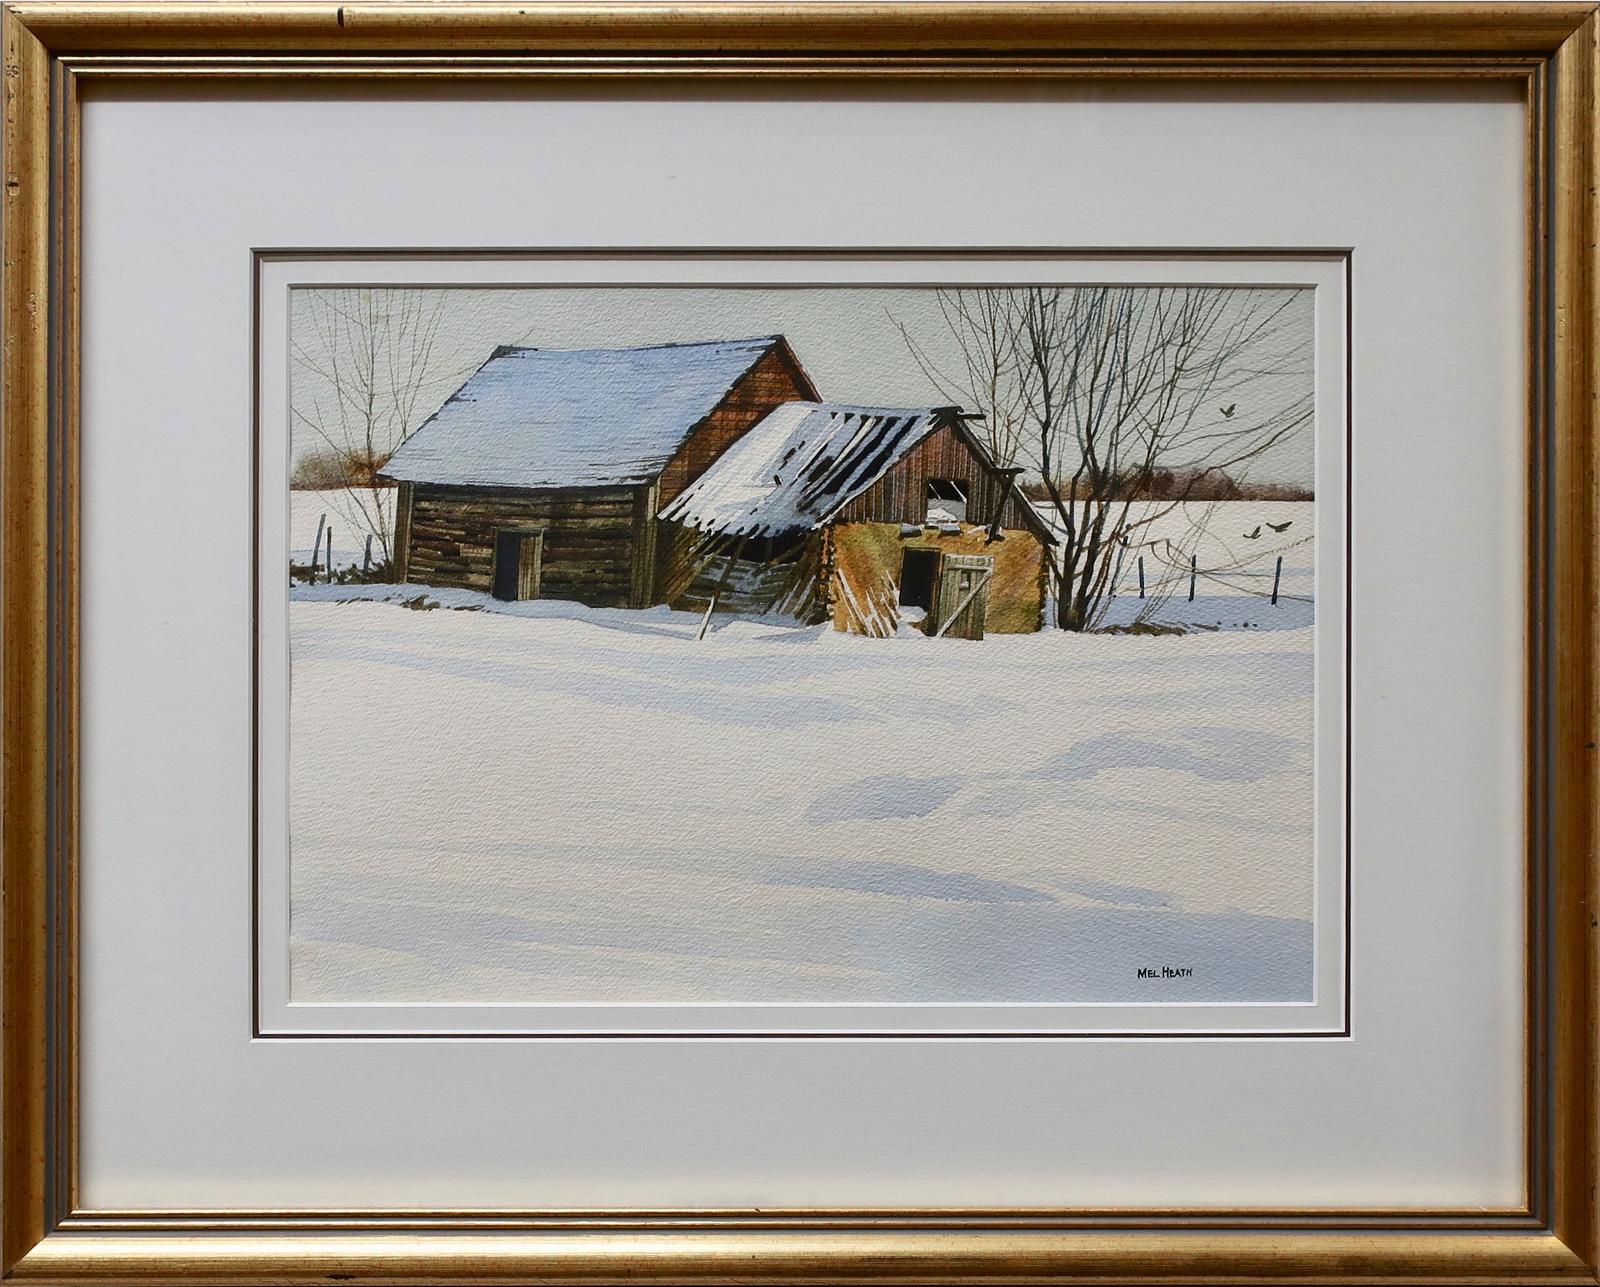 Mel Heath (1930) - Old Barn In Winter